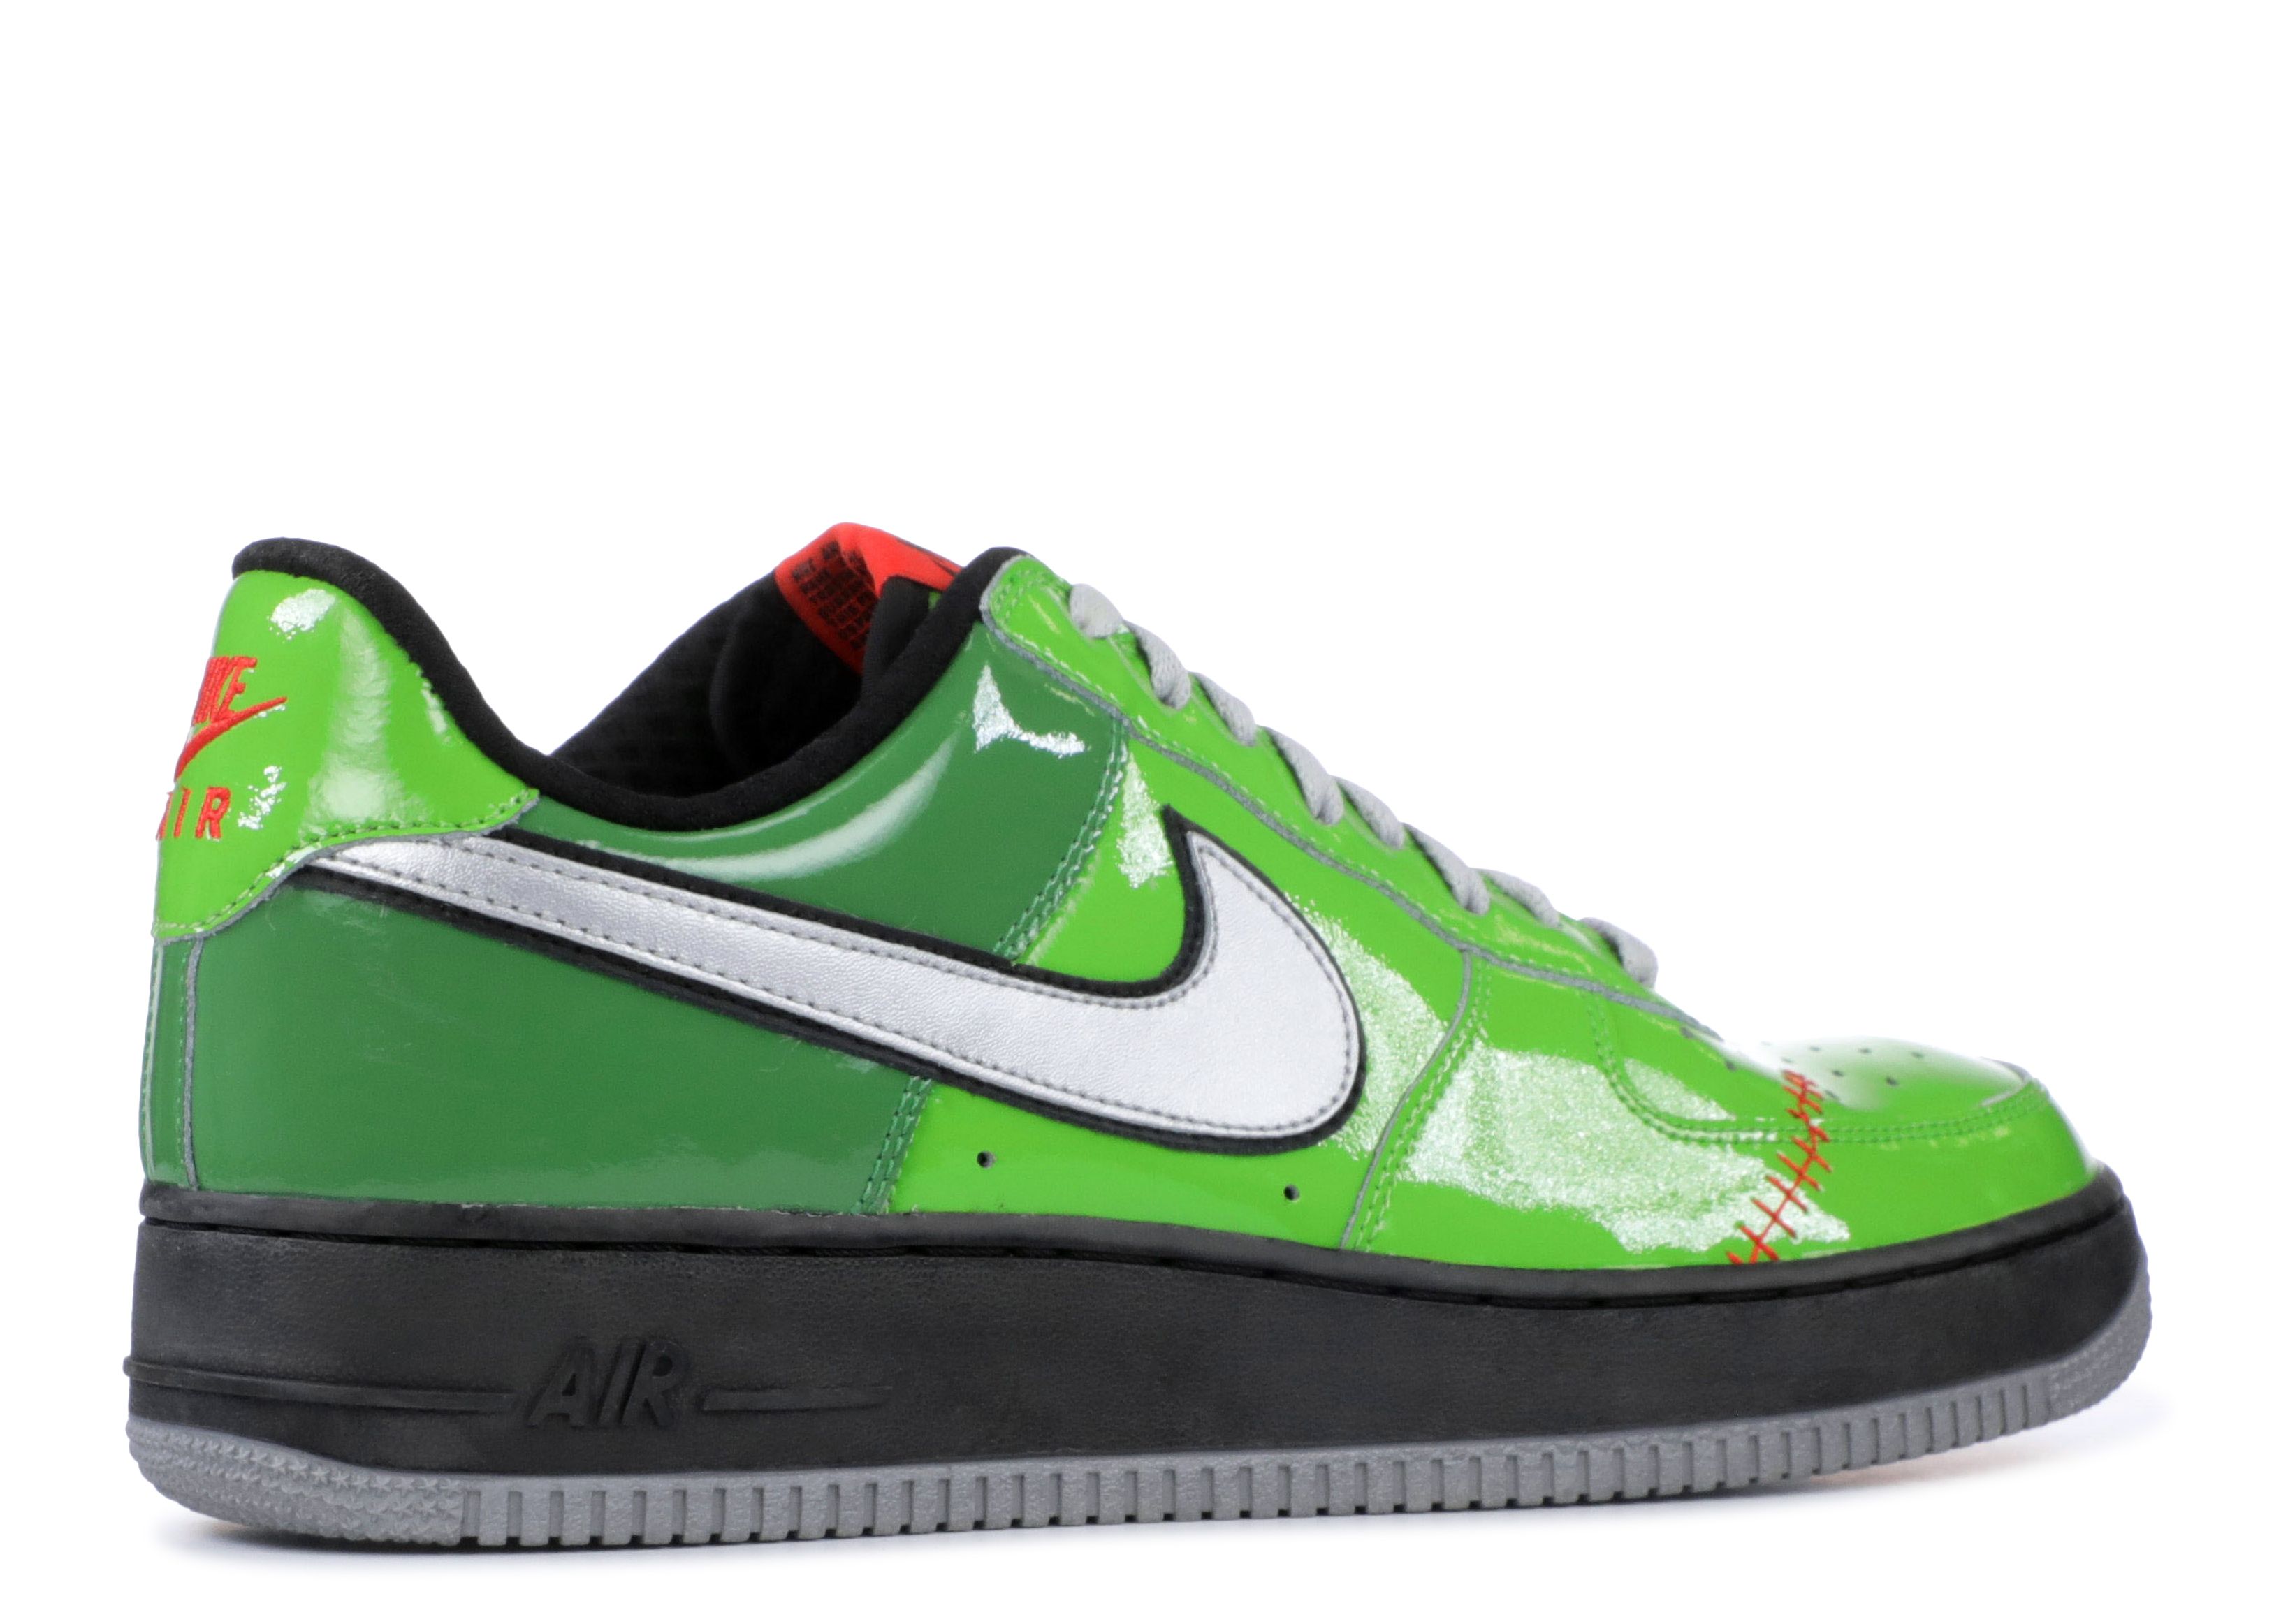 Nike Air Force 1 Dark Green in Dansoman - Shoes, Abrantie